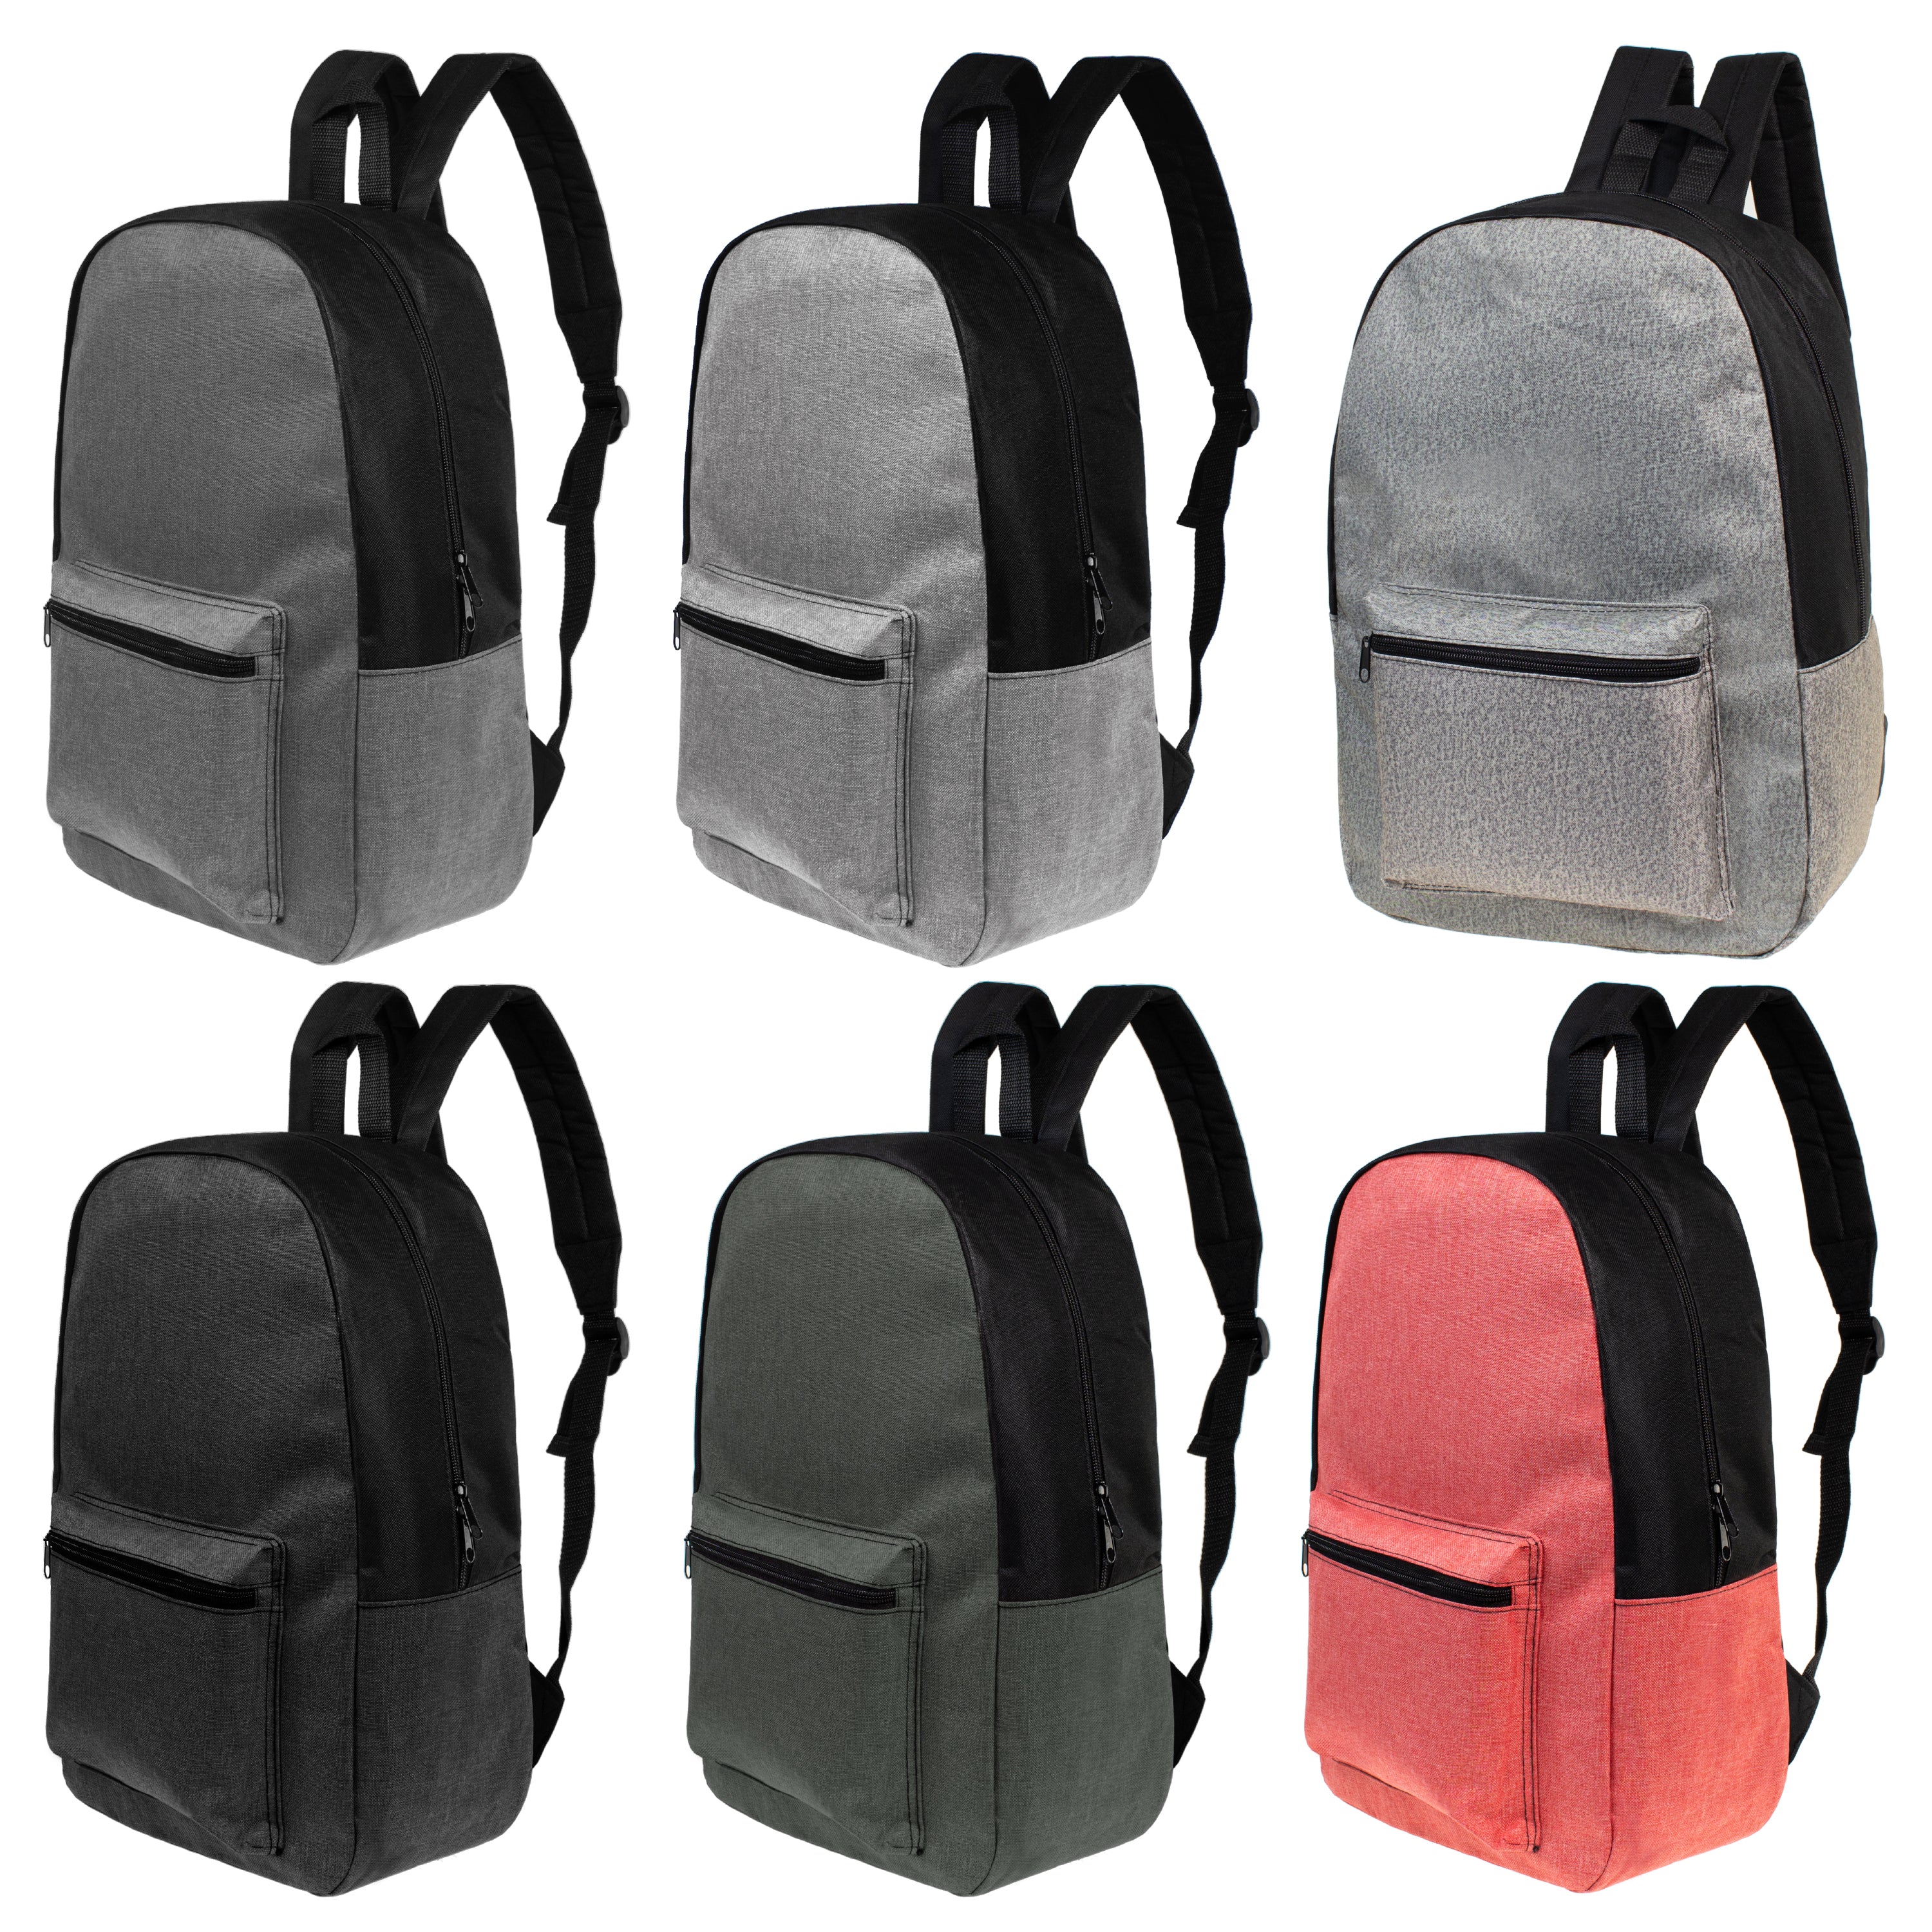 17" Kids Basic Wholesale Backpack in Assorted 6 Colors - Bulk Case of 24 Backpacks